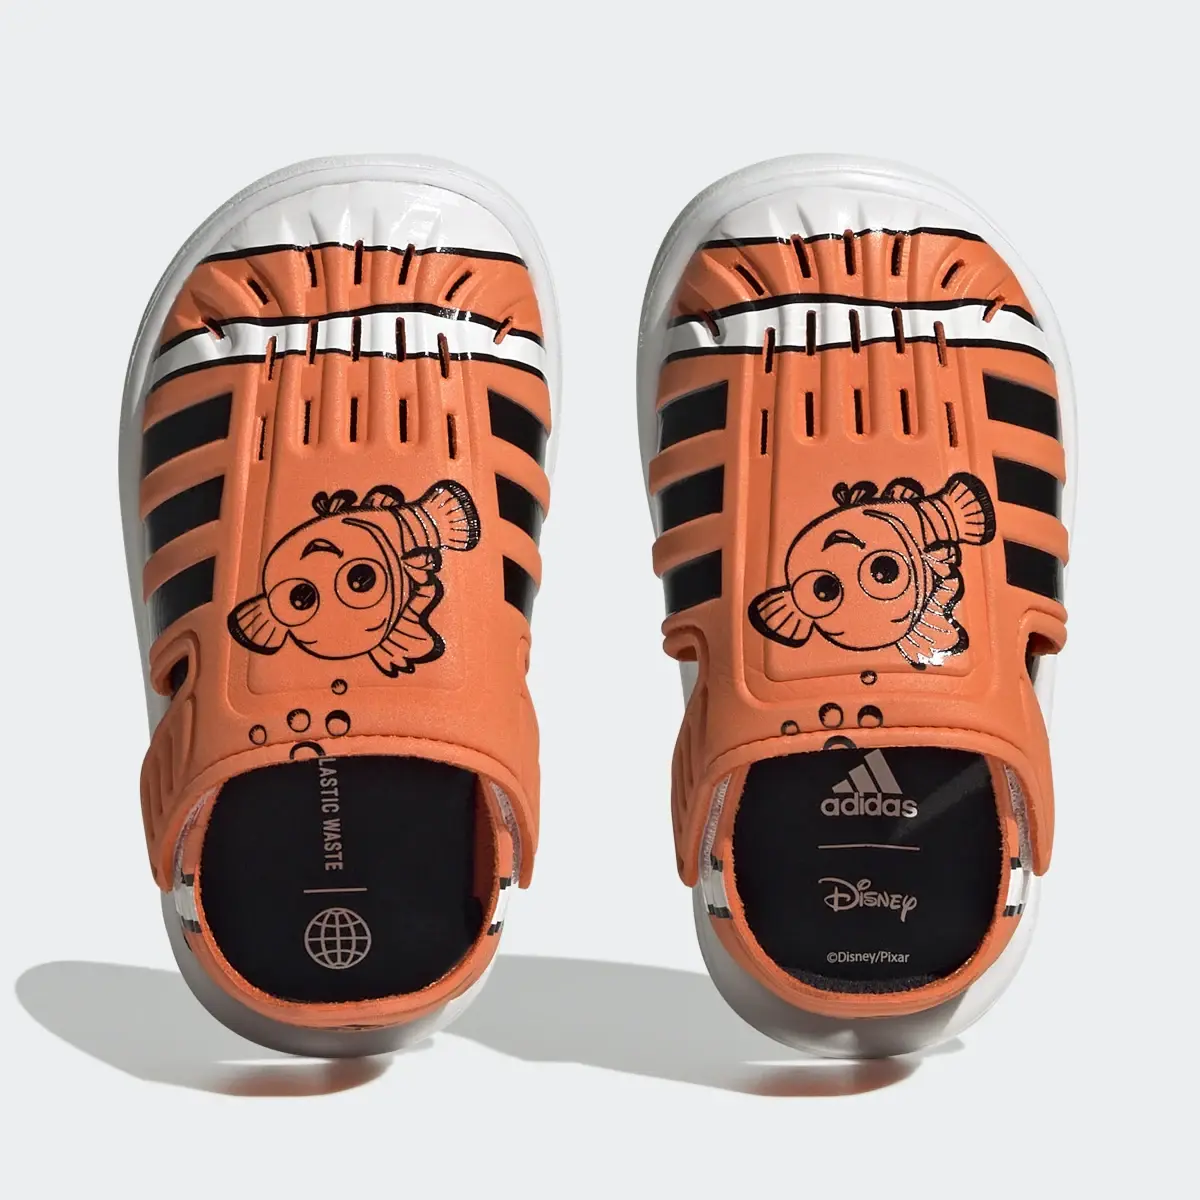 Adidas Findet Nemo Closed Toe Summer Sandale. 3